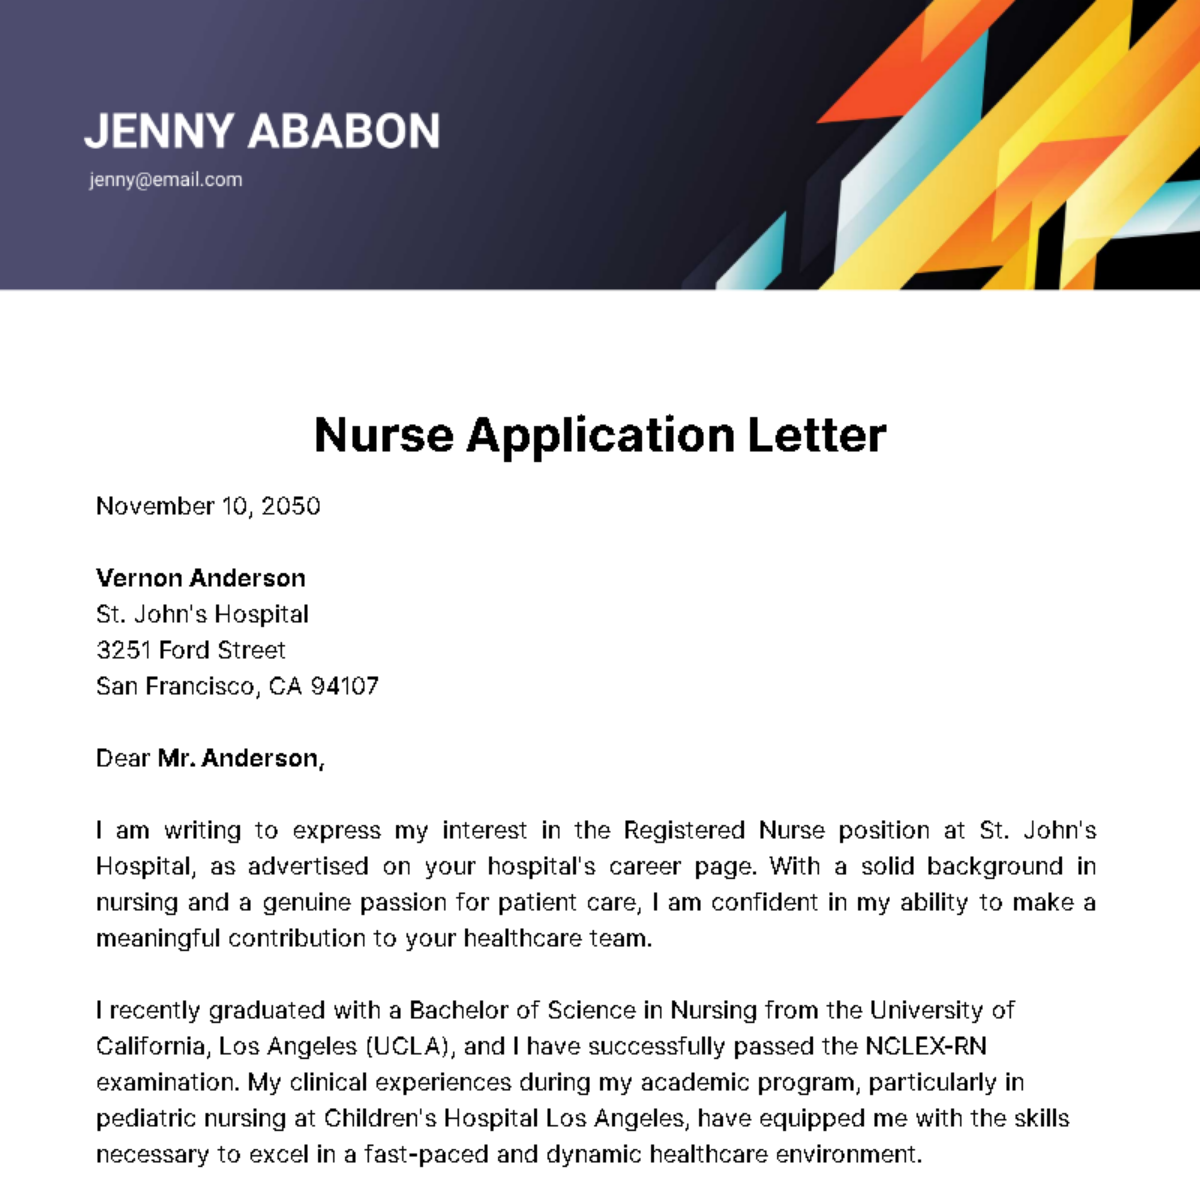 Nurse Application Letter  Template